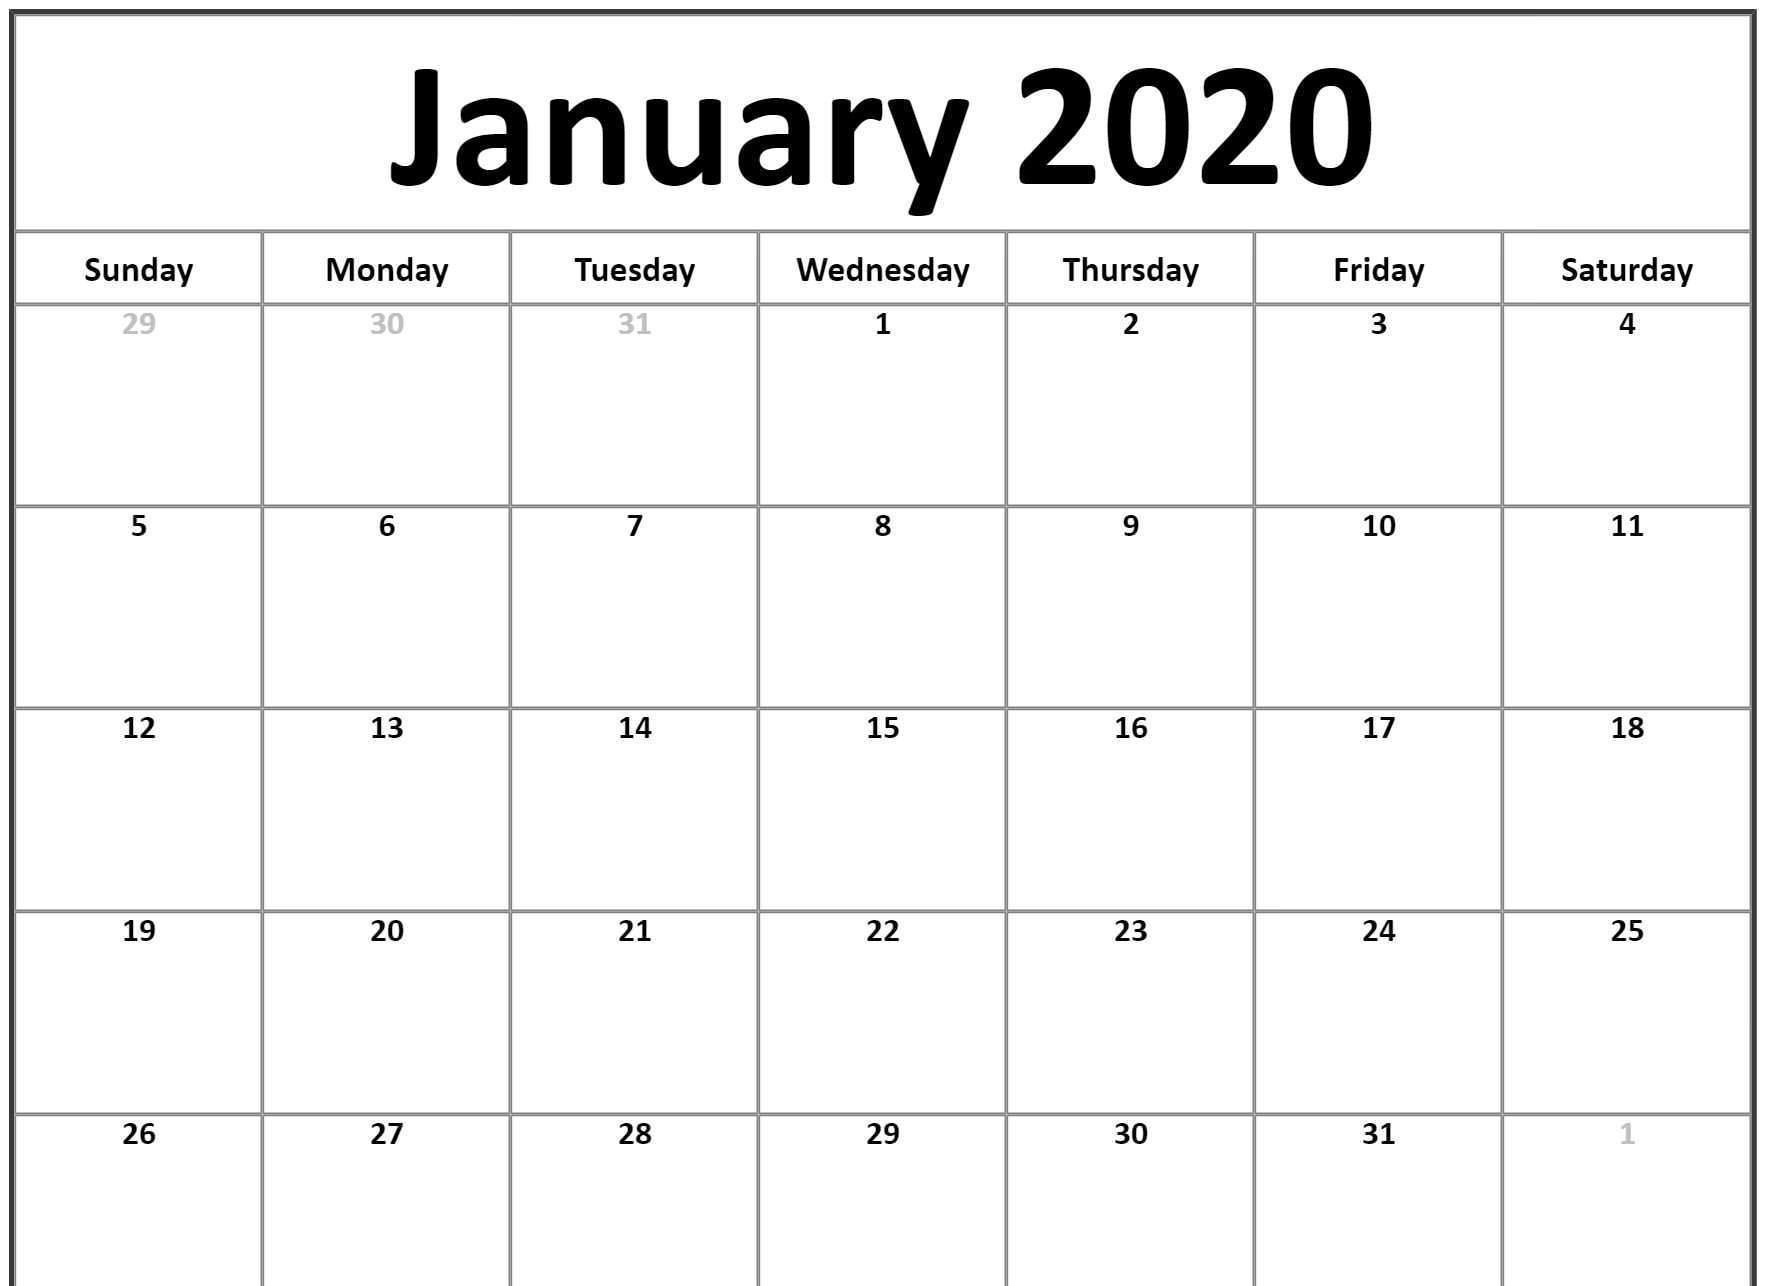 January Calendar 2020 Landscape - Free August 2019 Calendar